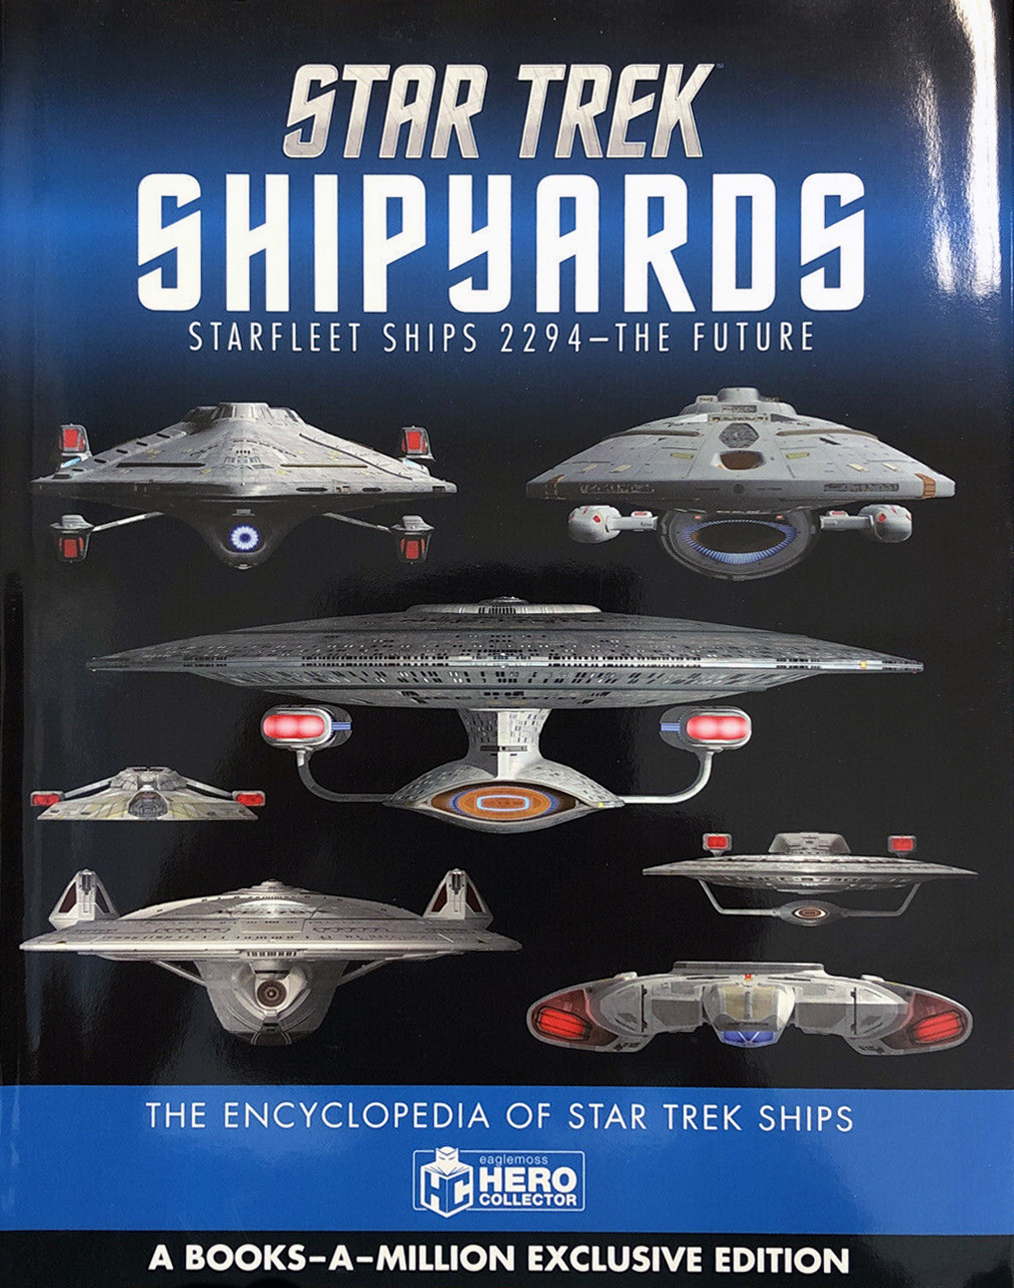 Star Trek Shipyards: Starfleet Ships 2294 - The Future Books-A-Million variant